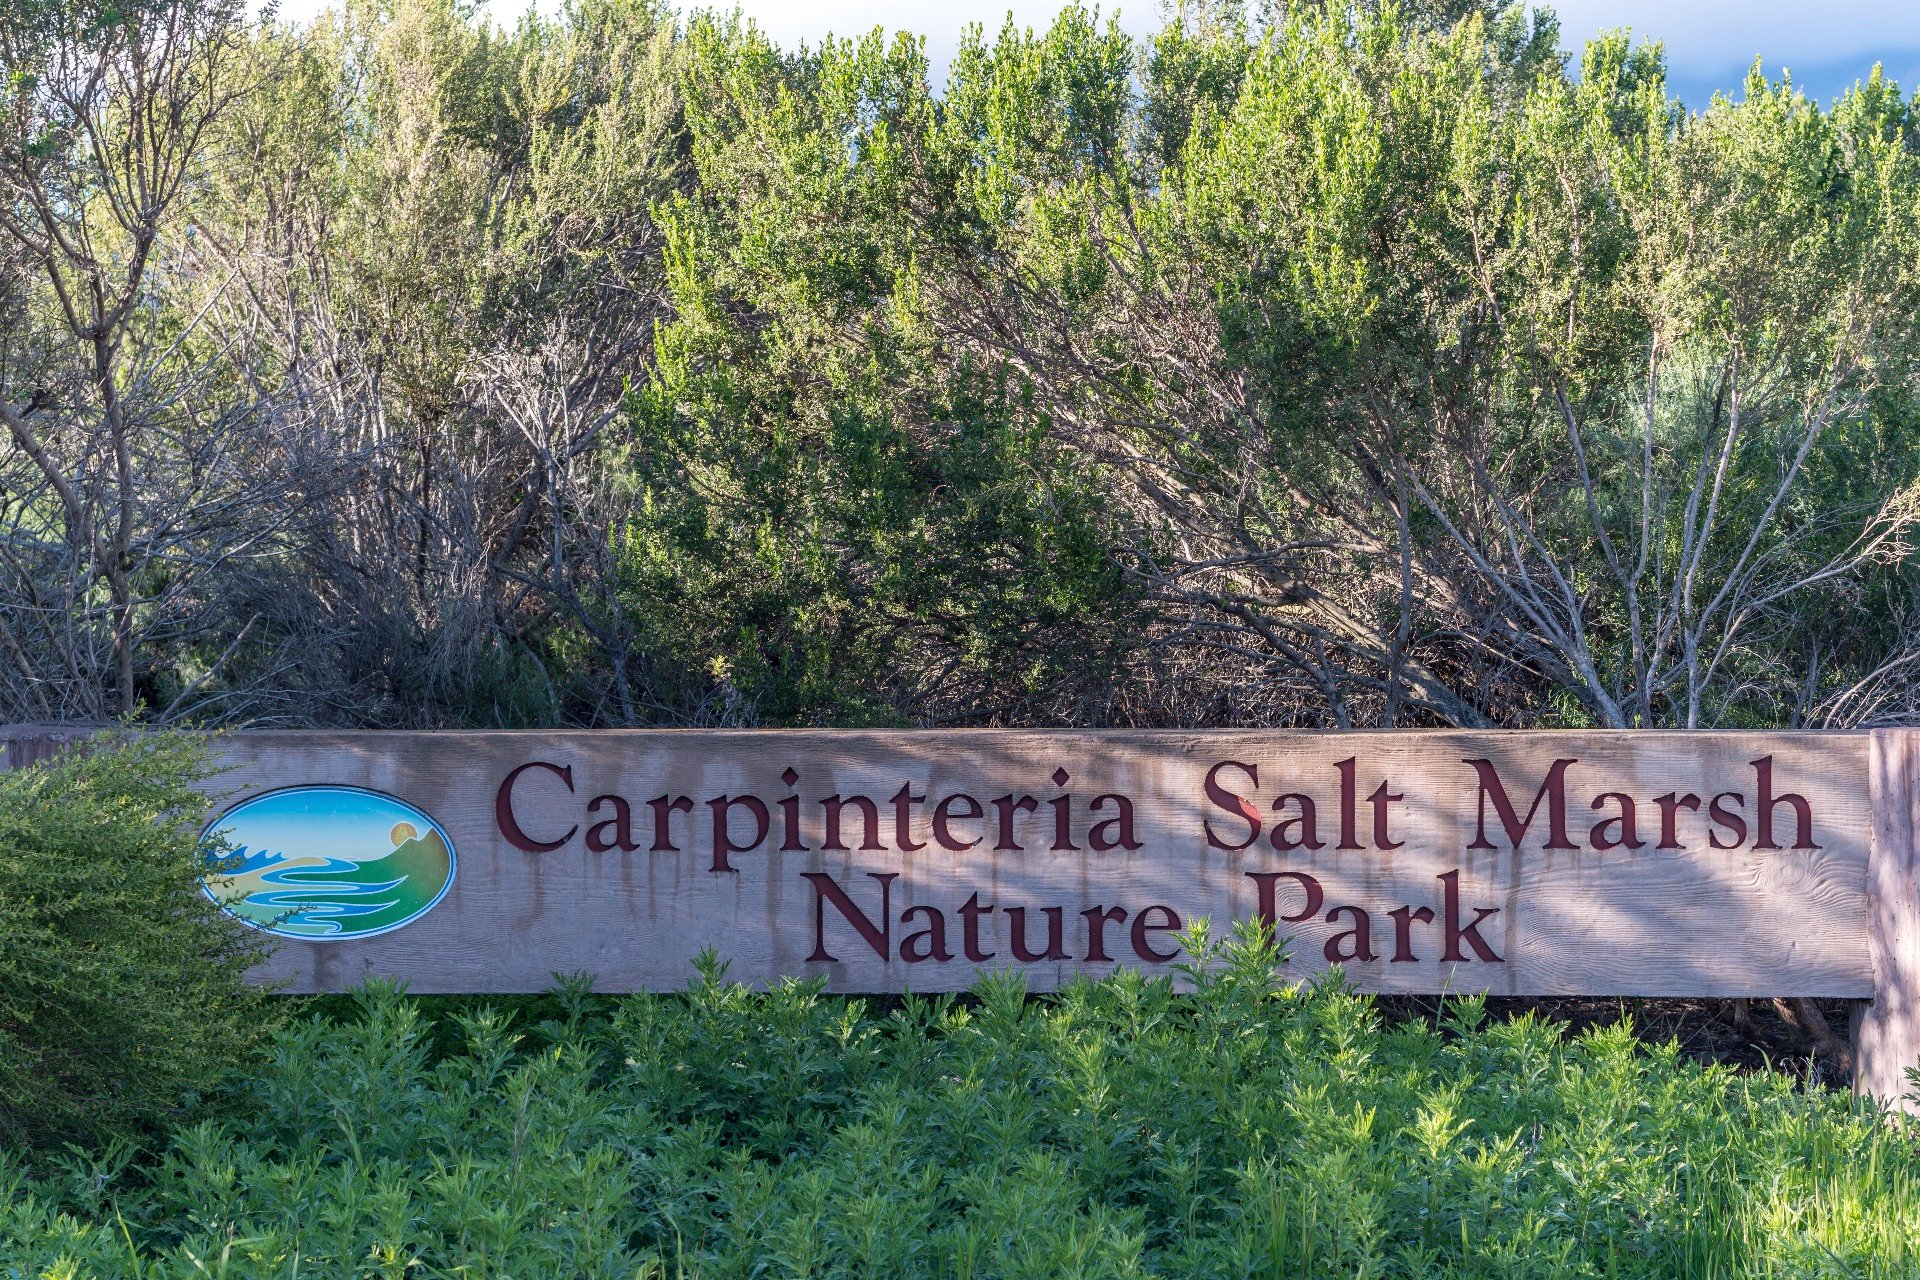 The Carpinteria Salt Marsh is a nice nature hike right next door to this condo.